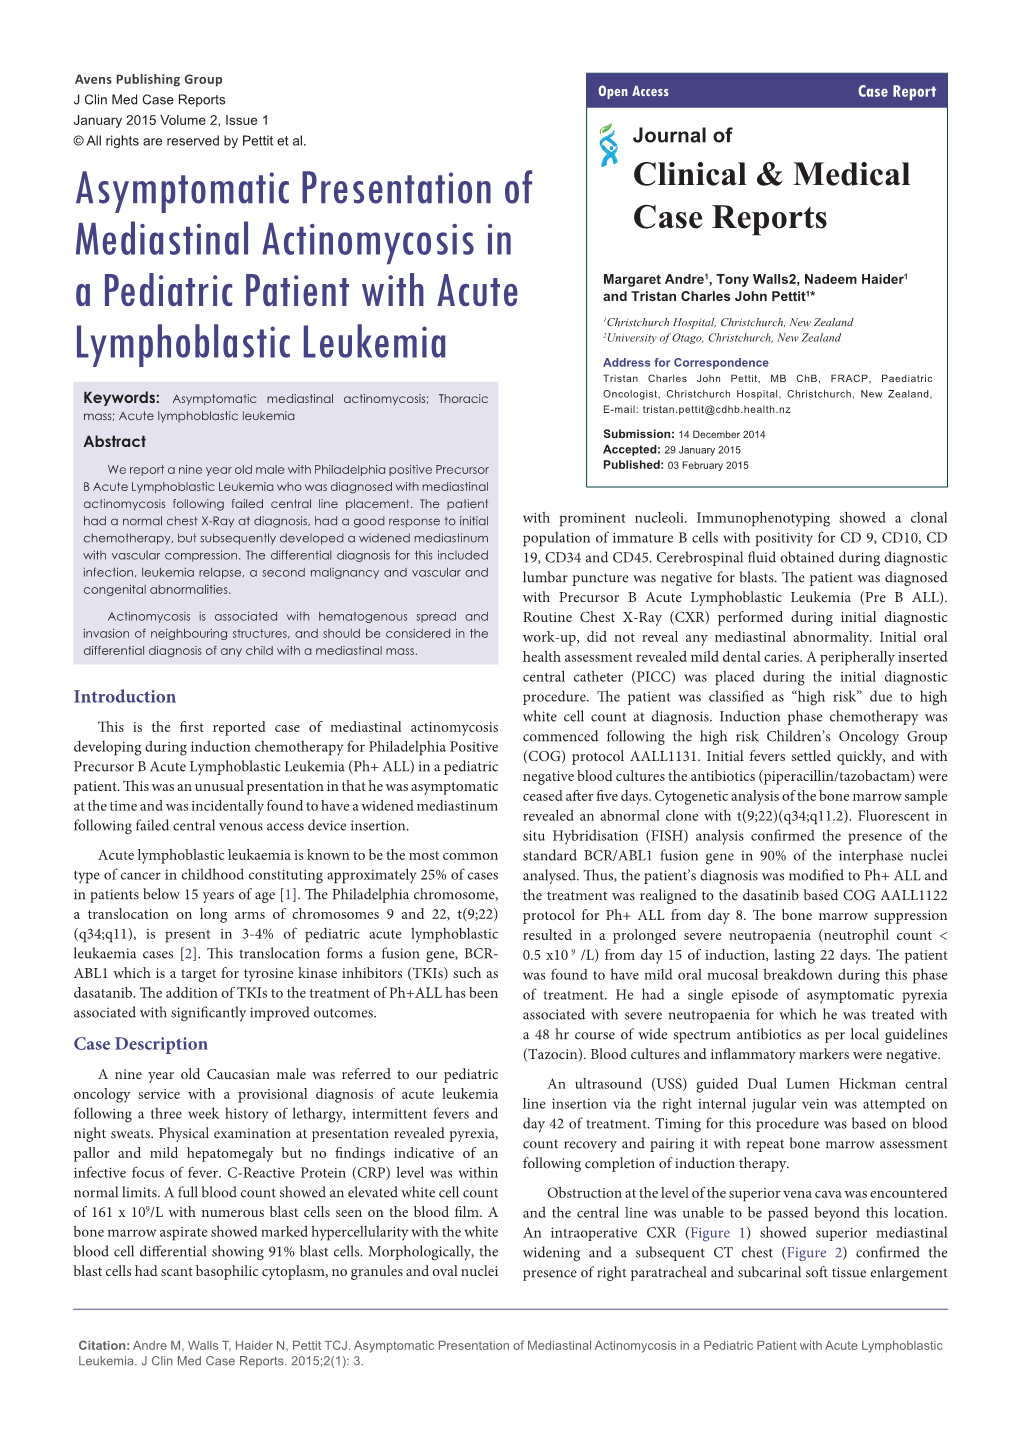 Asymptomatic Presentation of Mediastinal Actinomycosis in a Pediatric Patient with Acute Lymphoblastic Leukemia